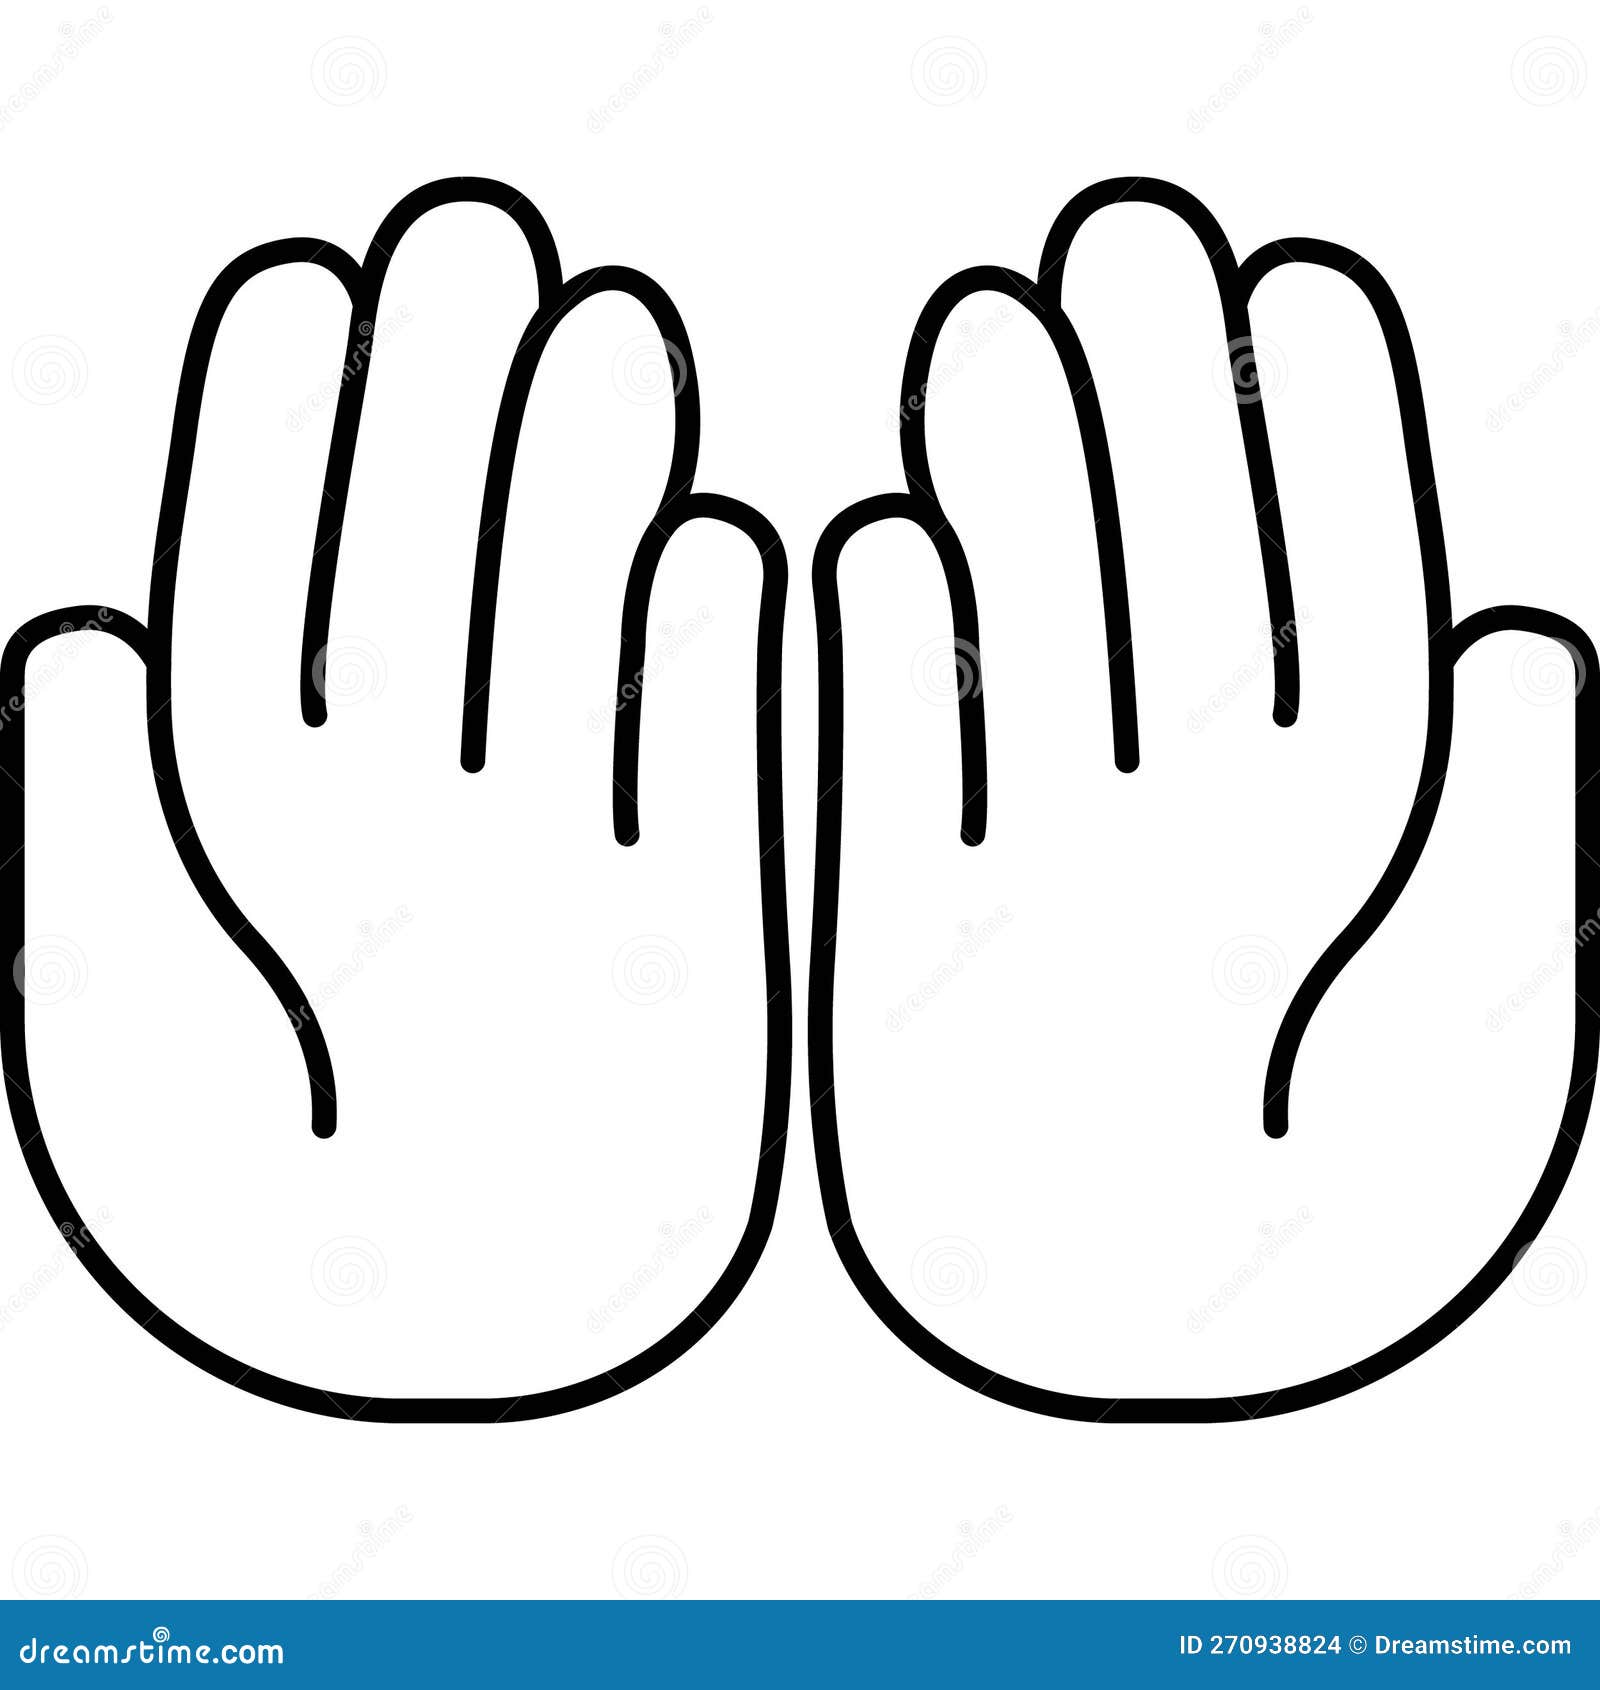 hand raiz pray which can easily edit or modify